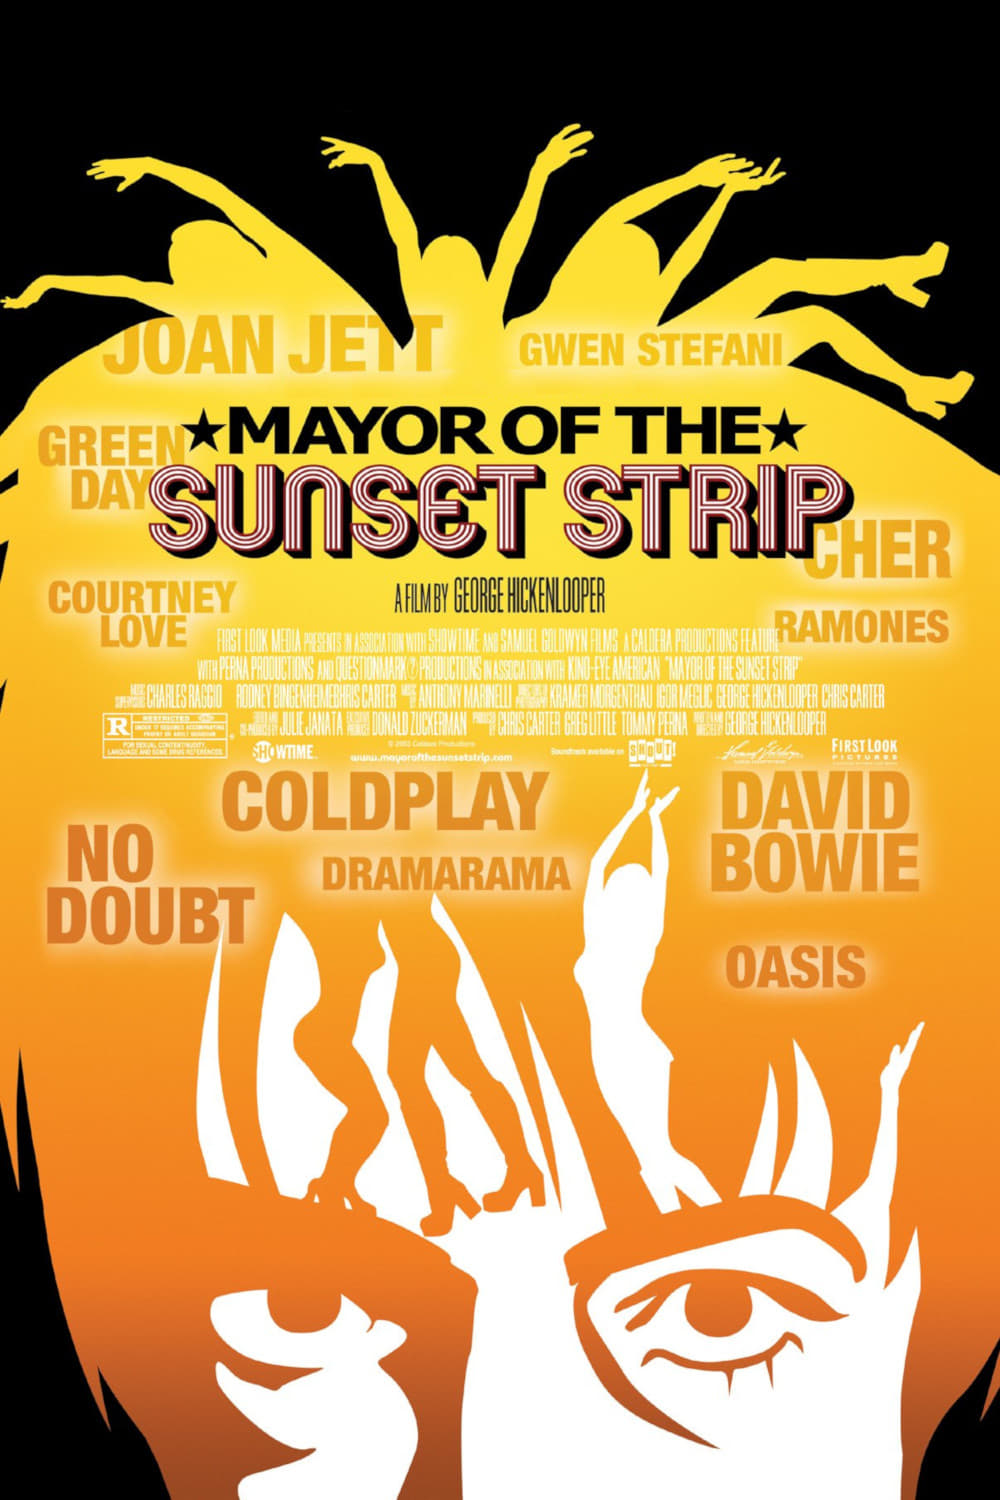 Mayor of the Sunset Strip (2003)